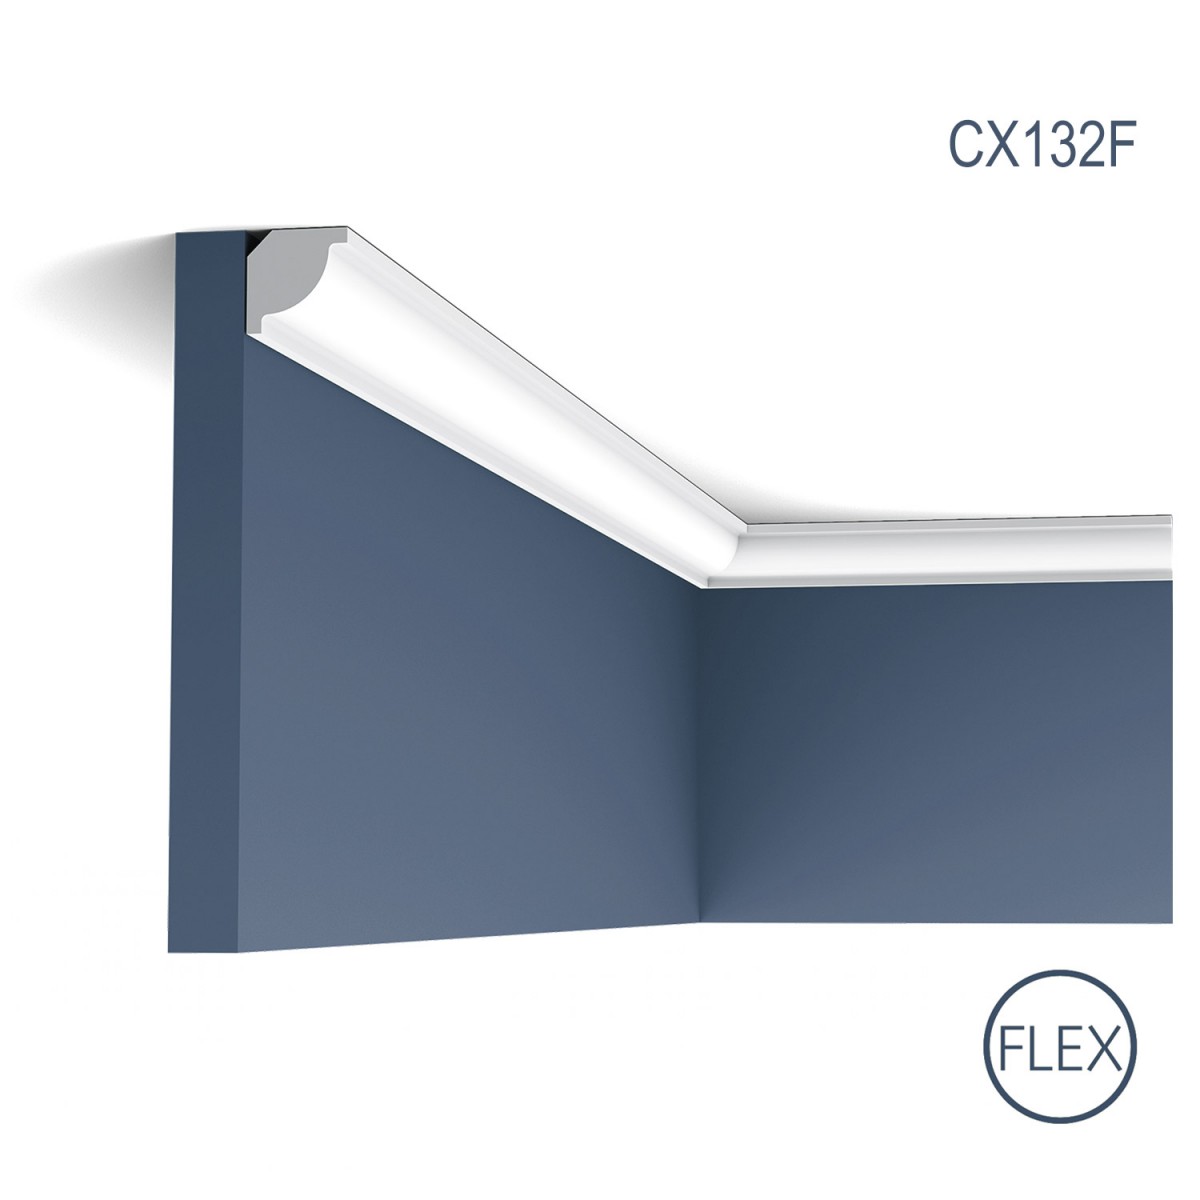 Profile Decorative Orac Decor ORC-CX132F, material: Poliuretan rigid